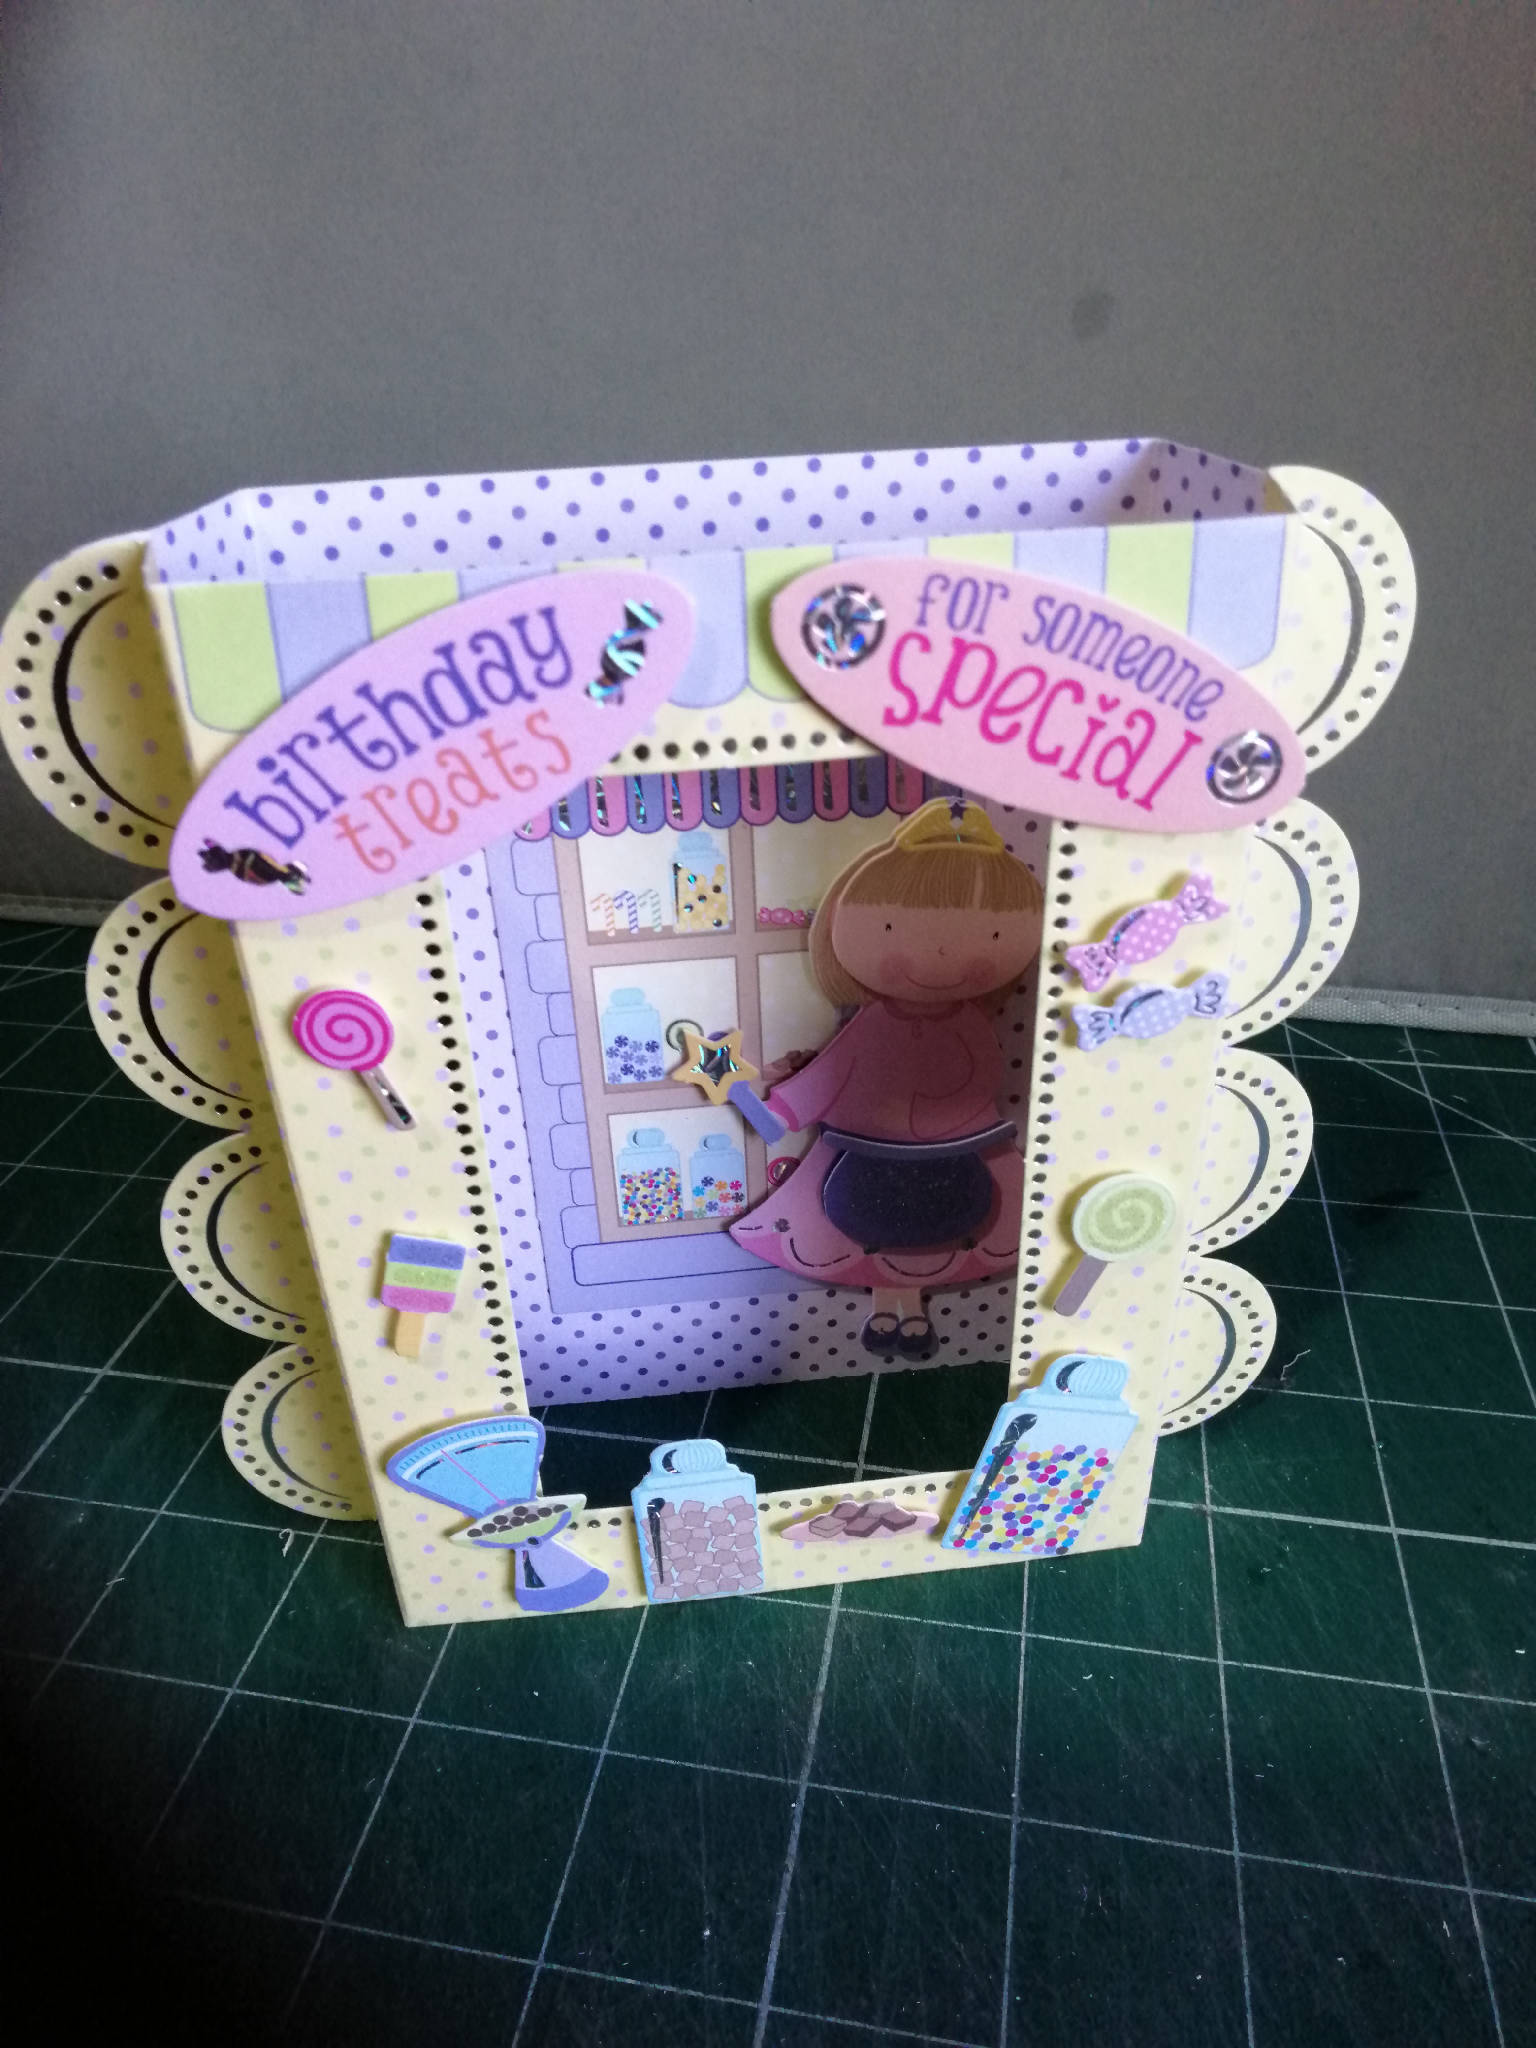 Handmade birthday card, tunnel effect sweet shop